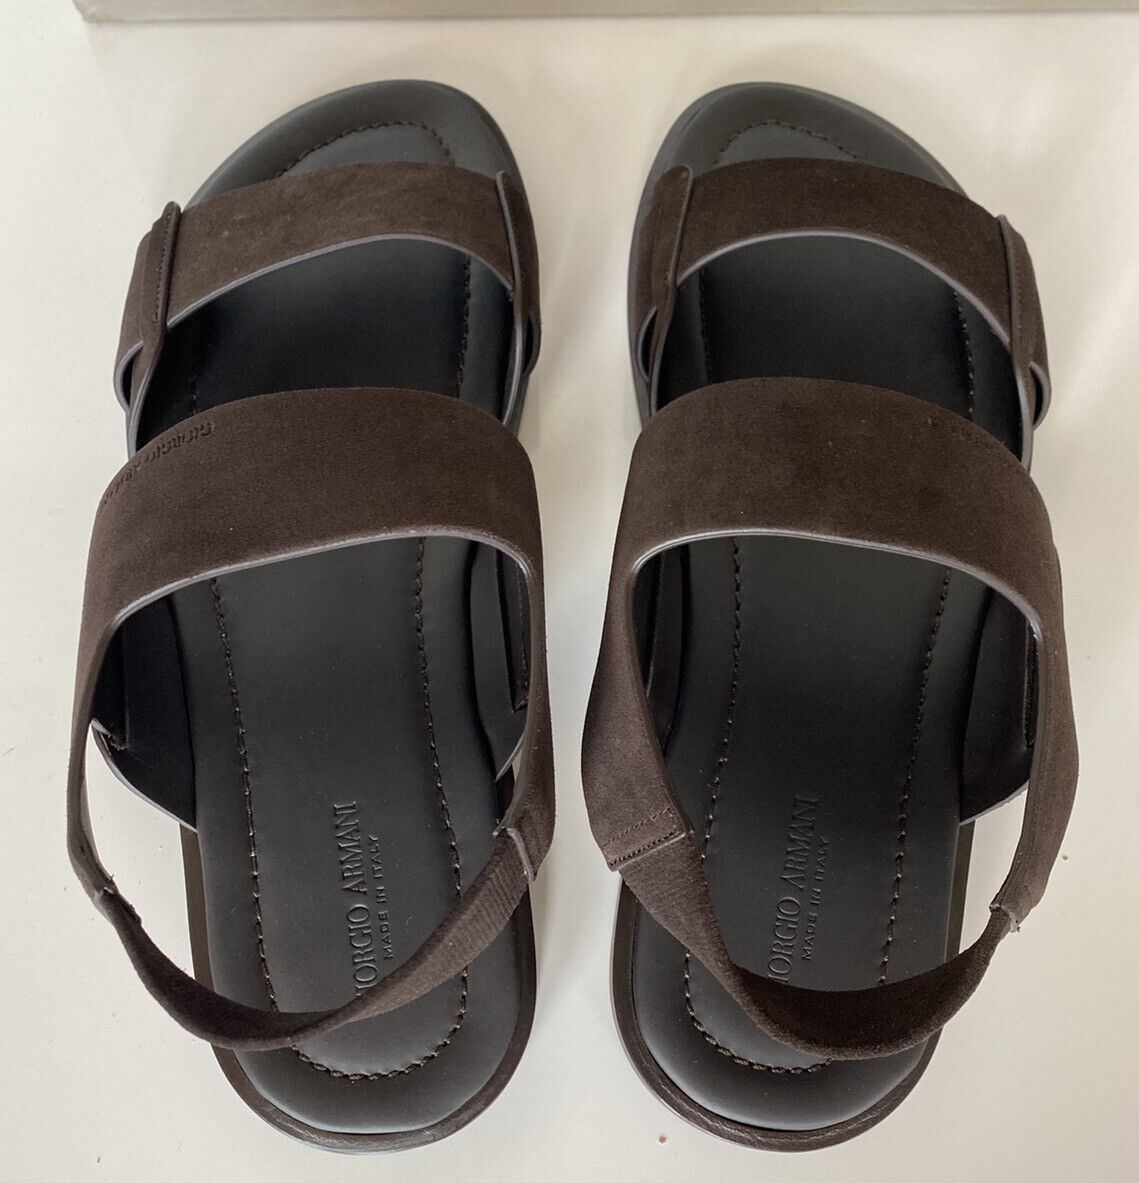 NIB $625 Giorgio Armani Brown Suede/Leather Ankle Strap Sandals 9 US X2P064 IT